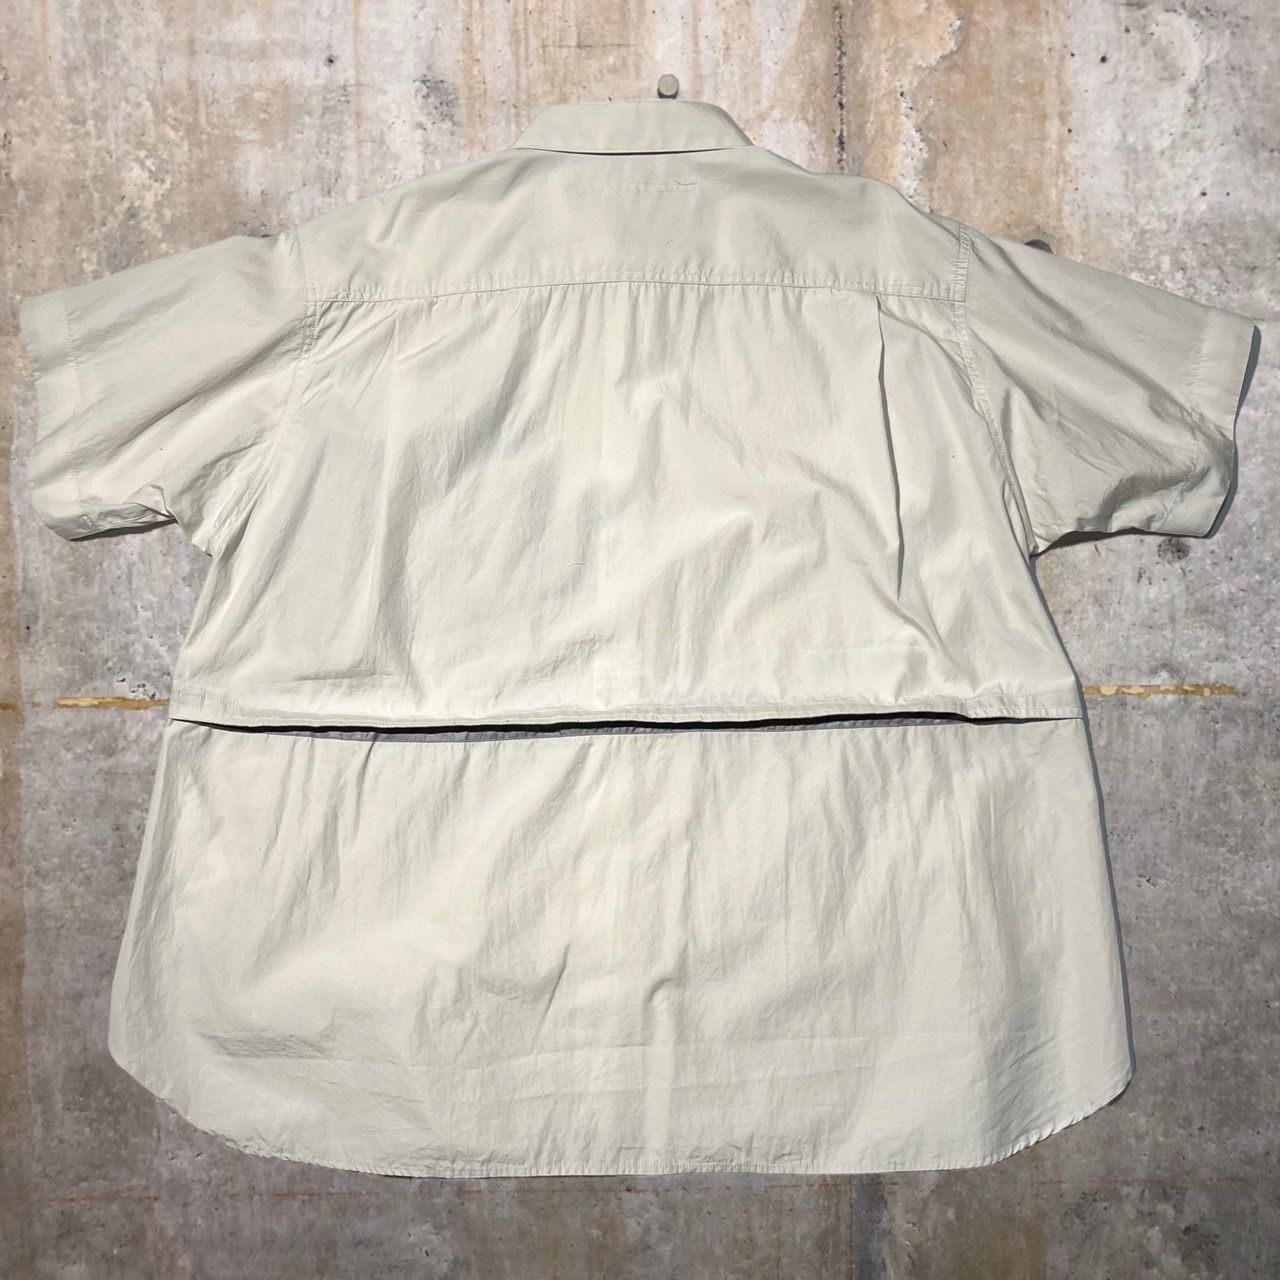 Tamme(タム) T.T S/S SHIRT/ポケットドッキング切替半袖シャツ